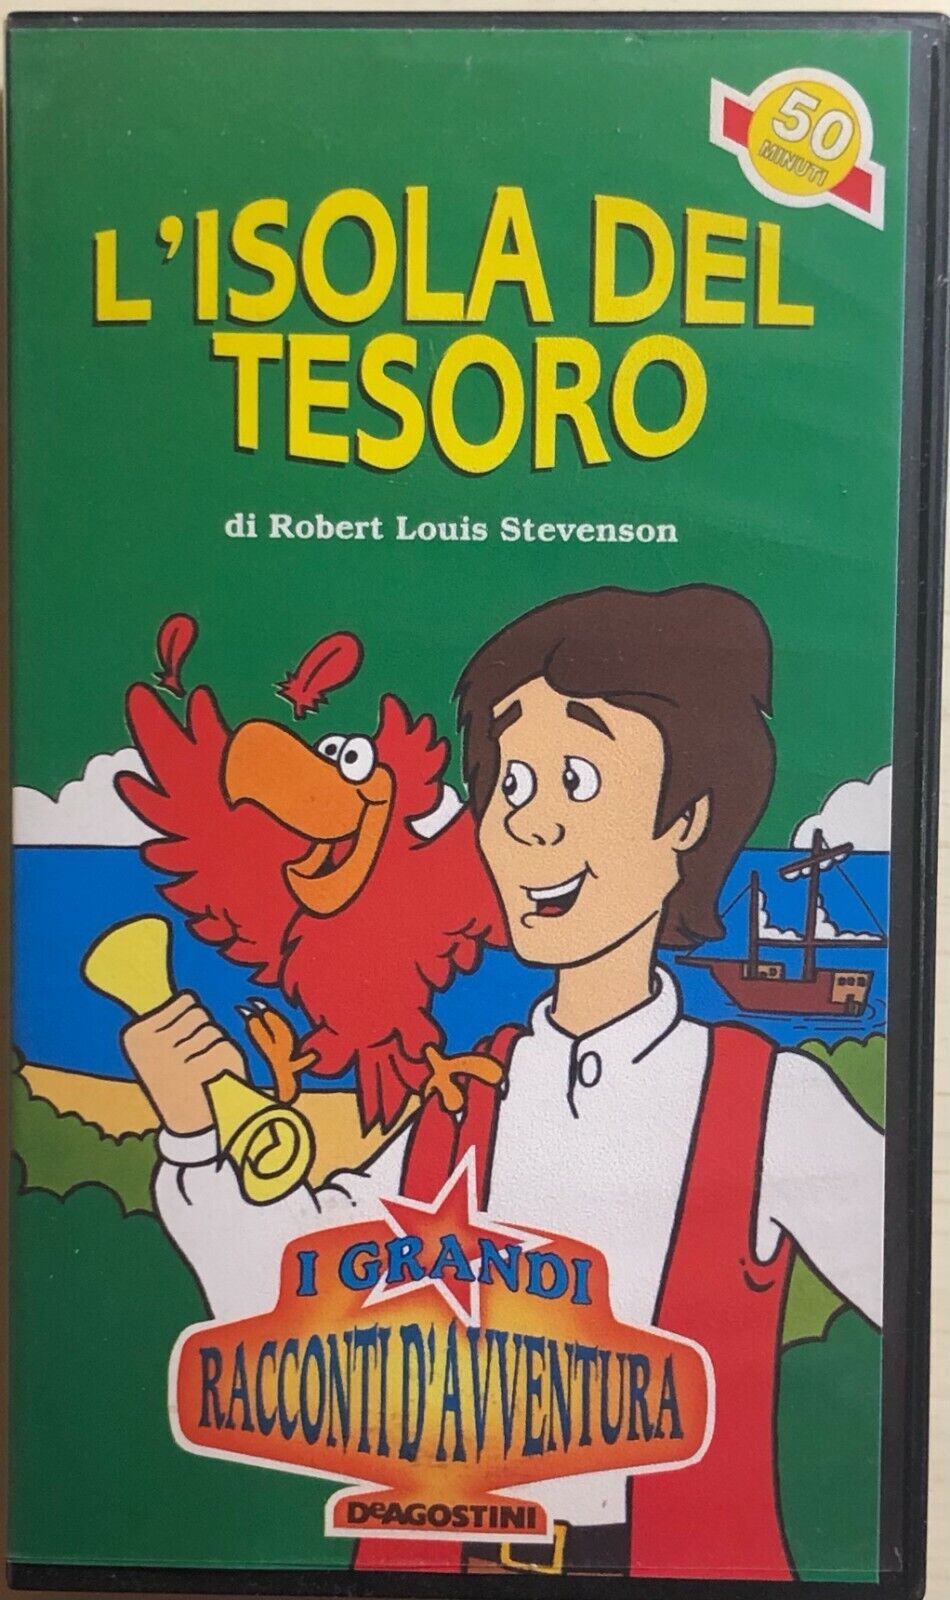 L'isola del tesoro VHS di Robert Louis Stevenson,  1993,  Deagostini